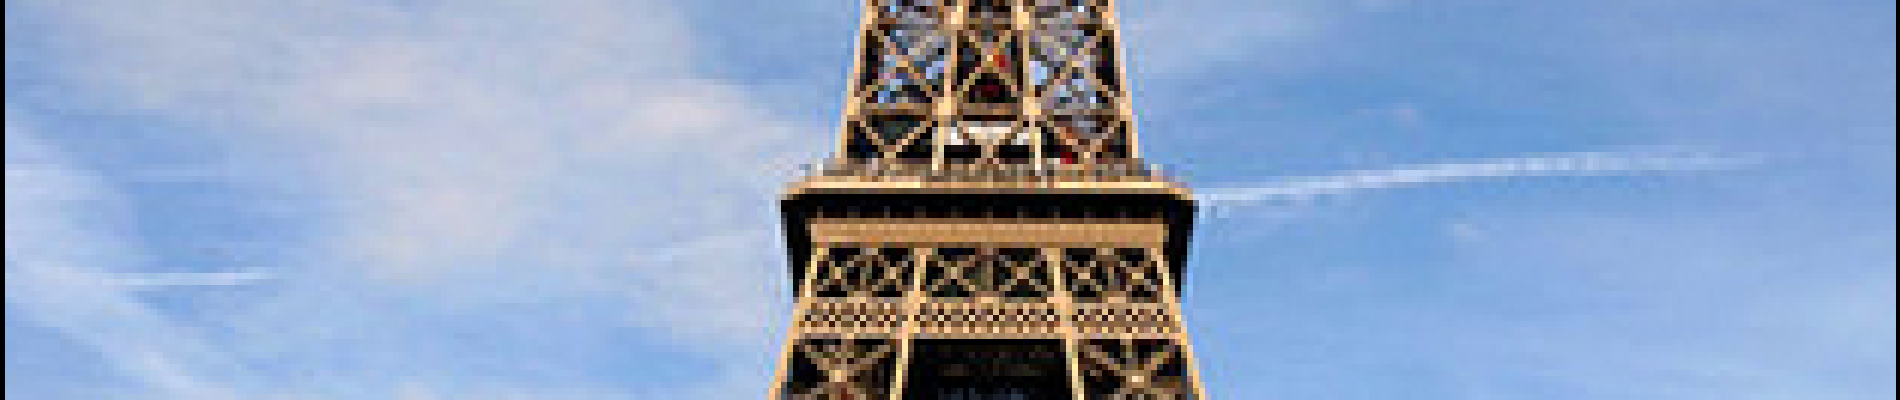 Punto di interesse Parigi - Tour Eiffel - Photo